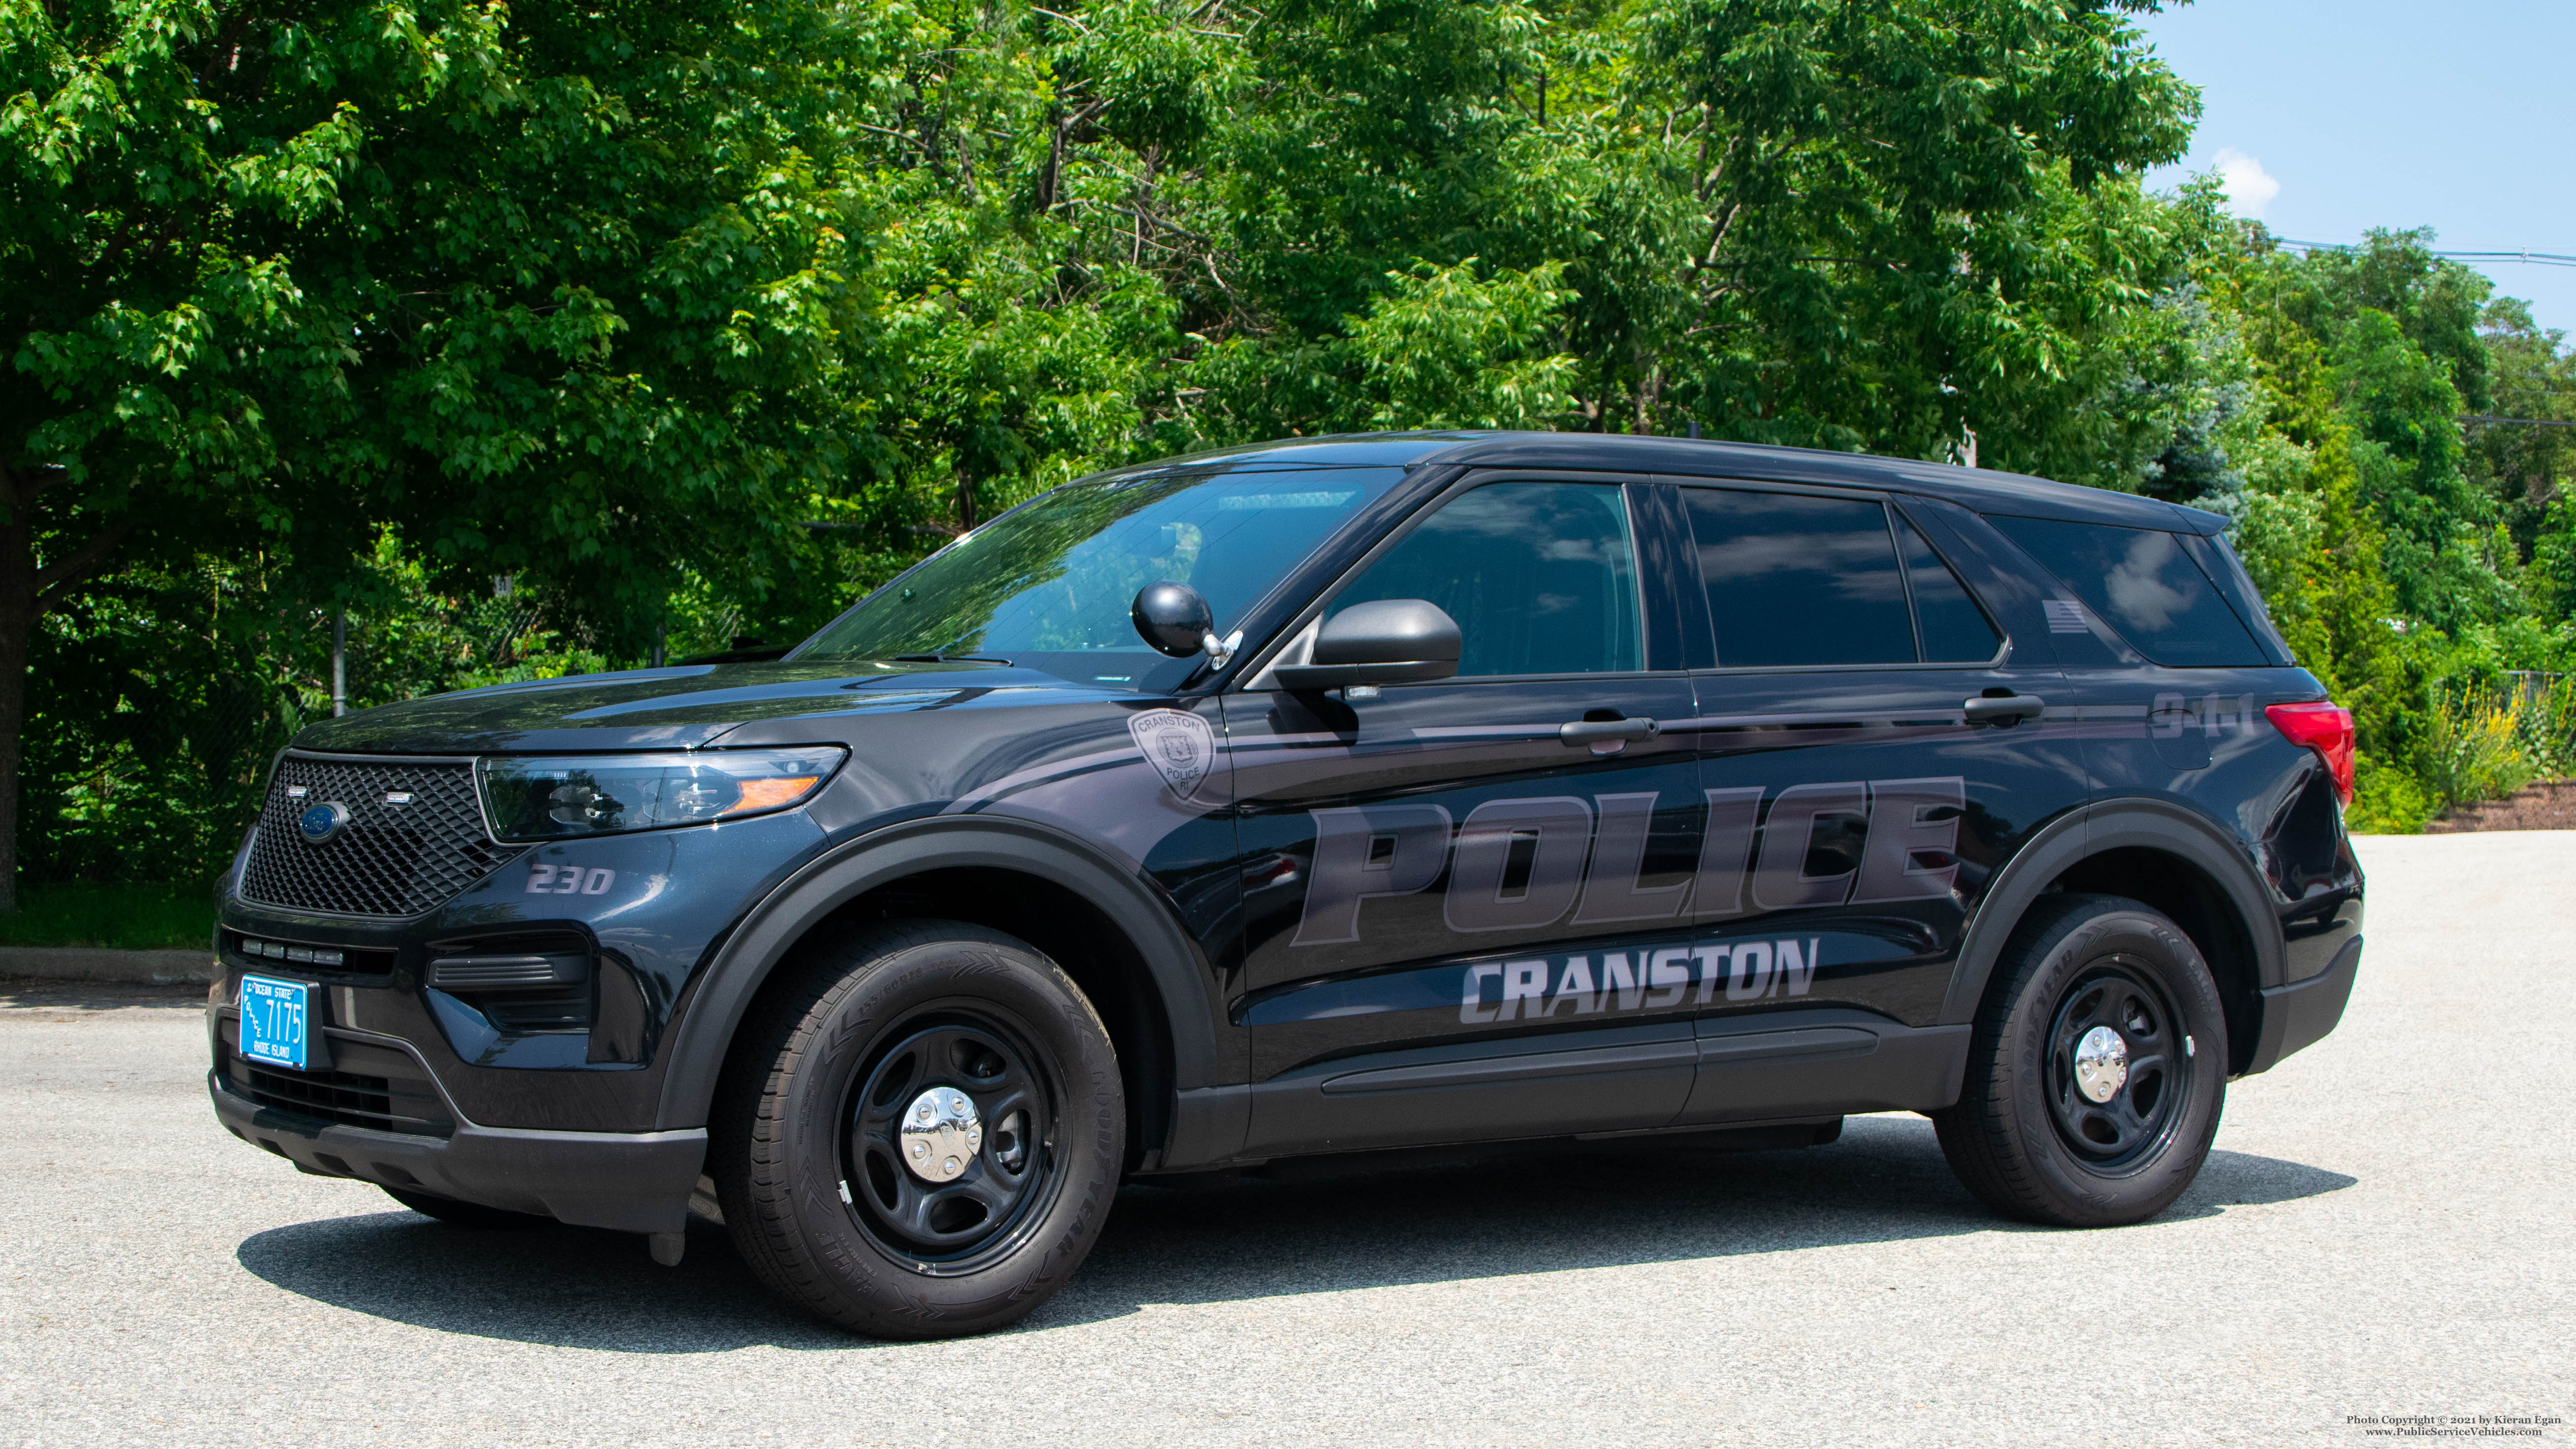 A photo  of Cranston Police
            Cruiser 230, a 2020 Ford Police Interceptor Utility             taken by Kieran Egan